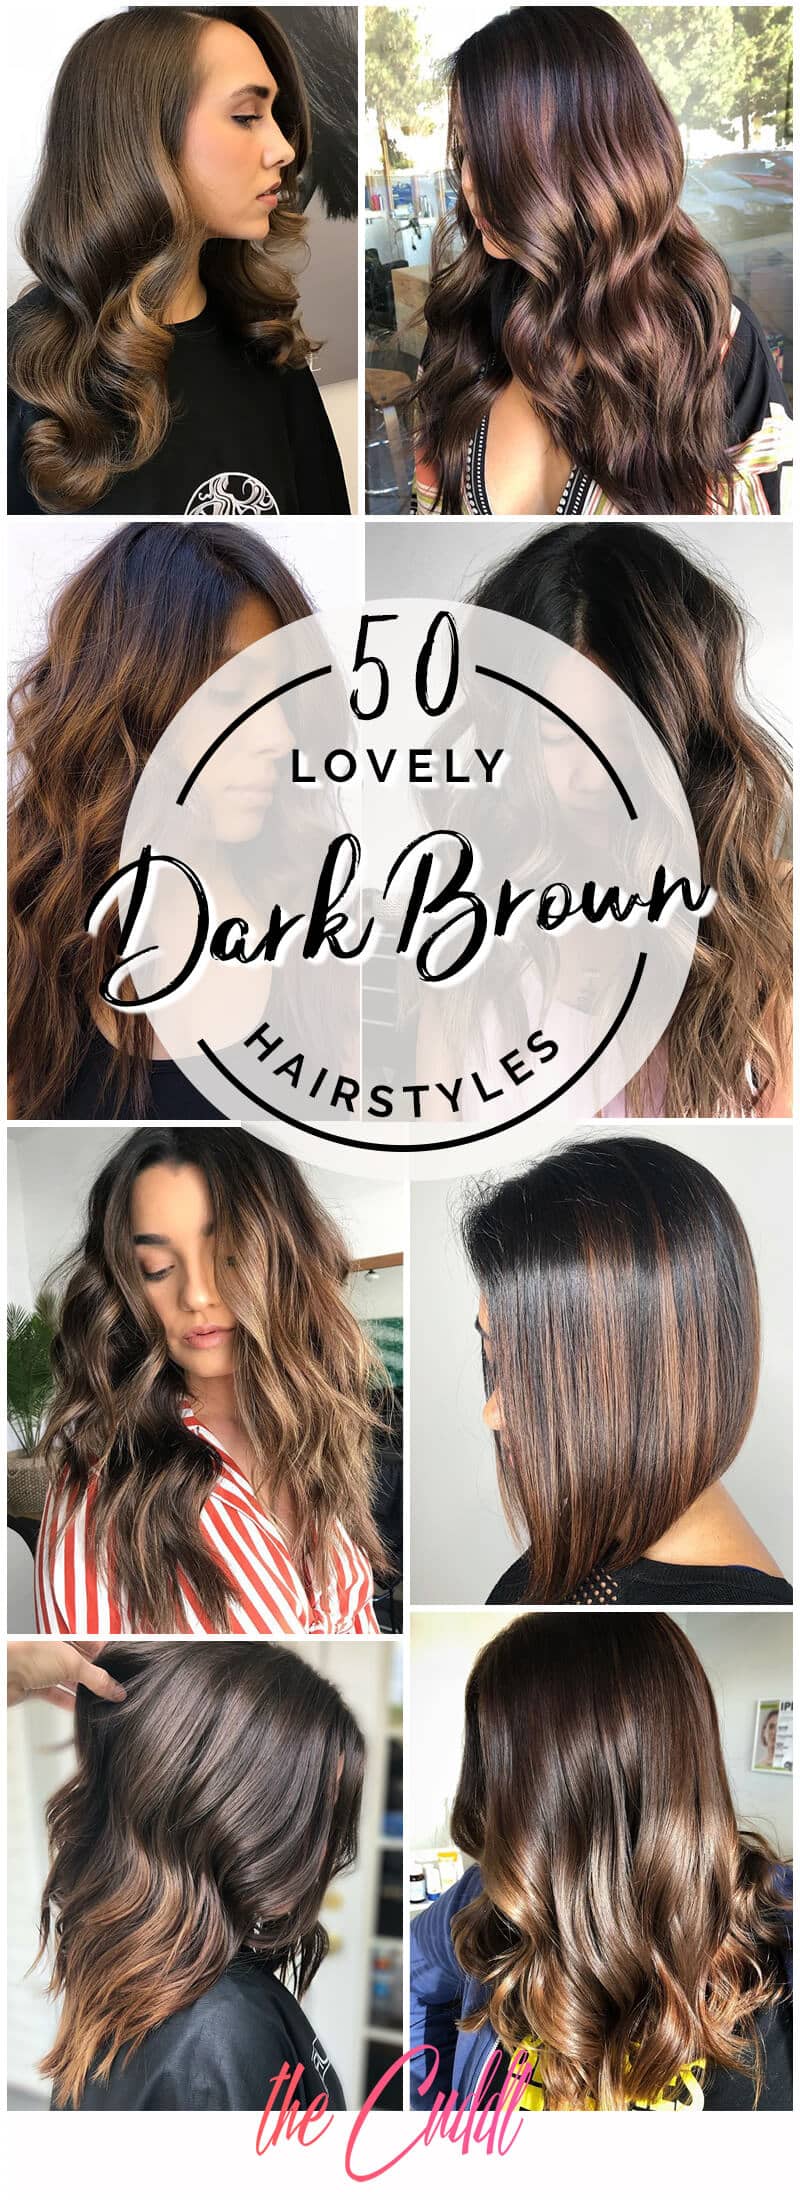 50 Lovely Dark Brown Hair Ideas to Glow